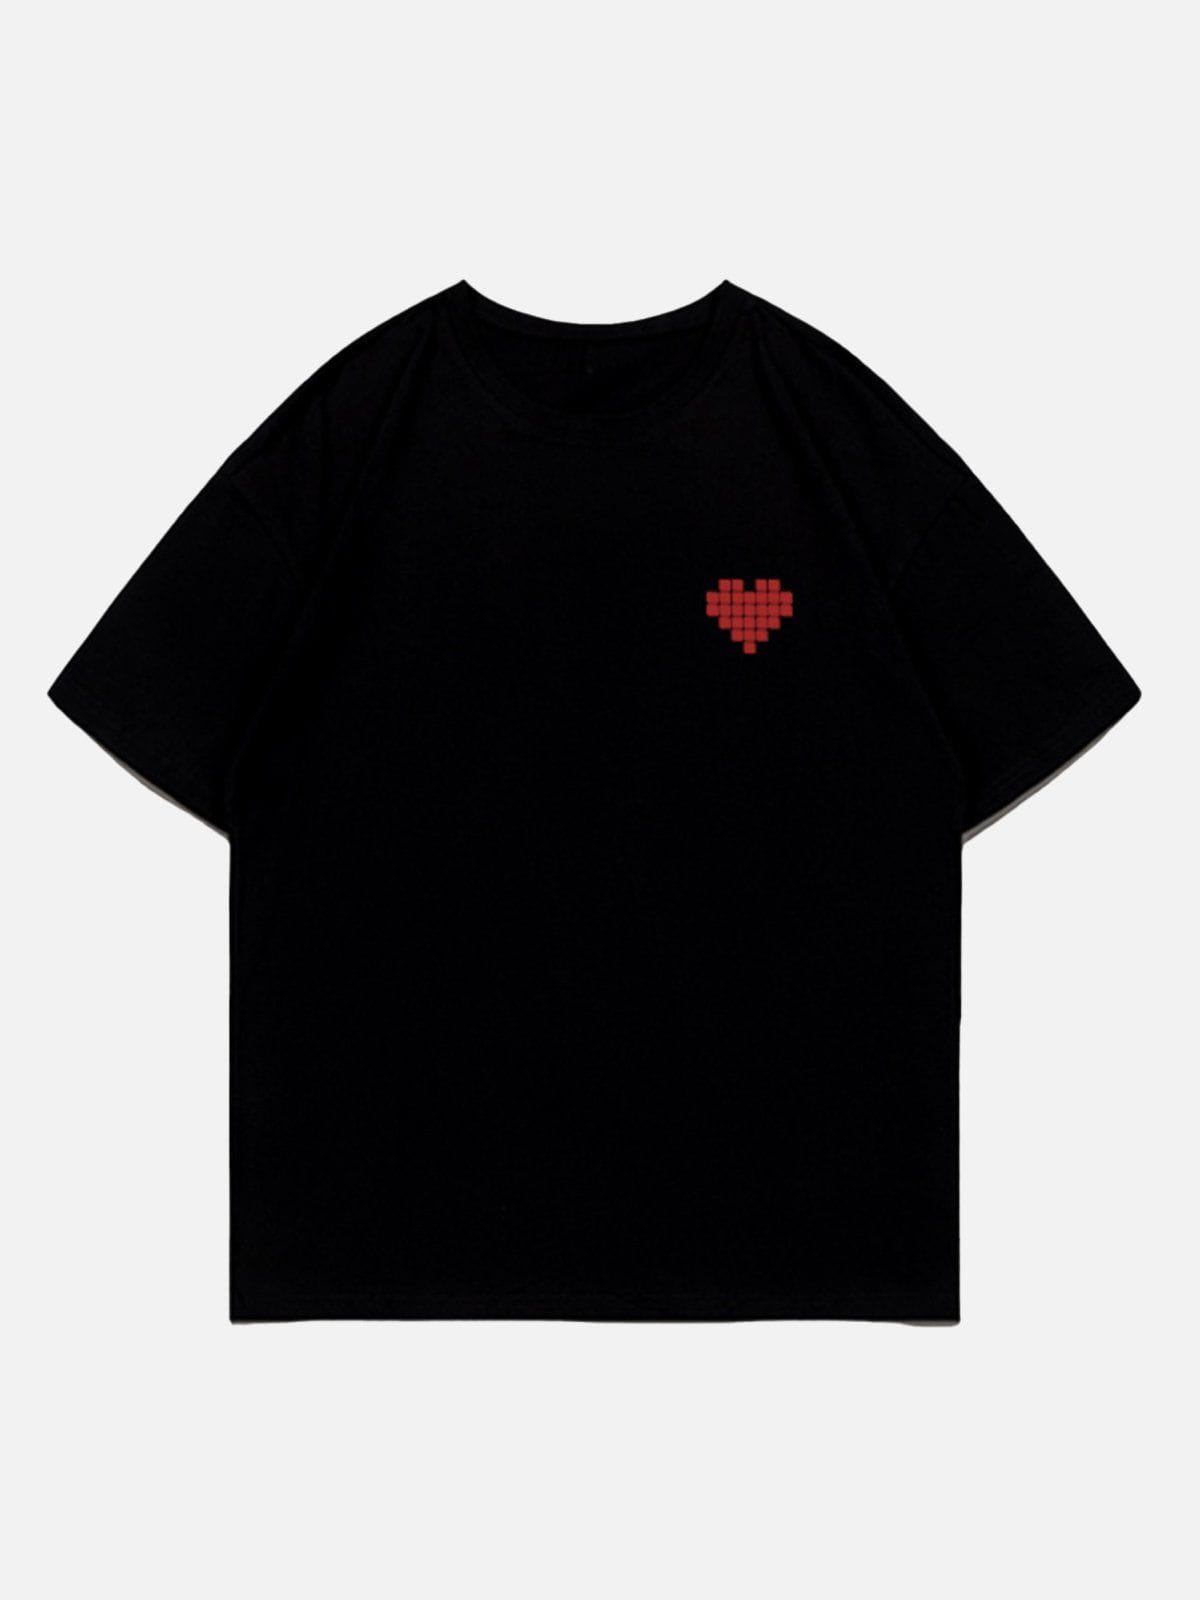 Sneakerland™ - Mosaic Heart Print Tee